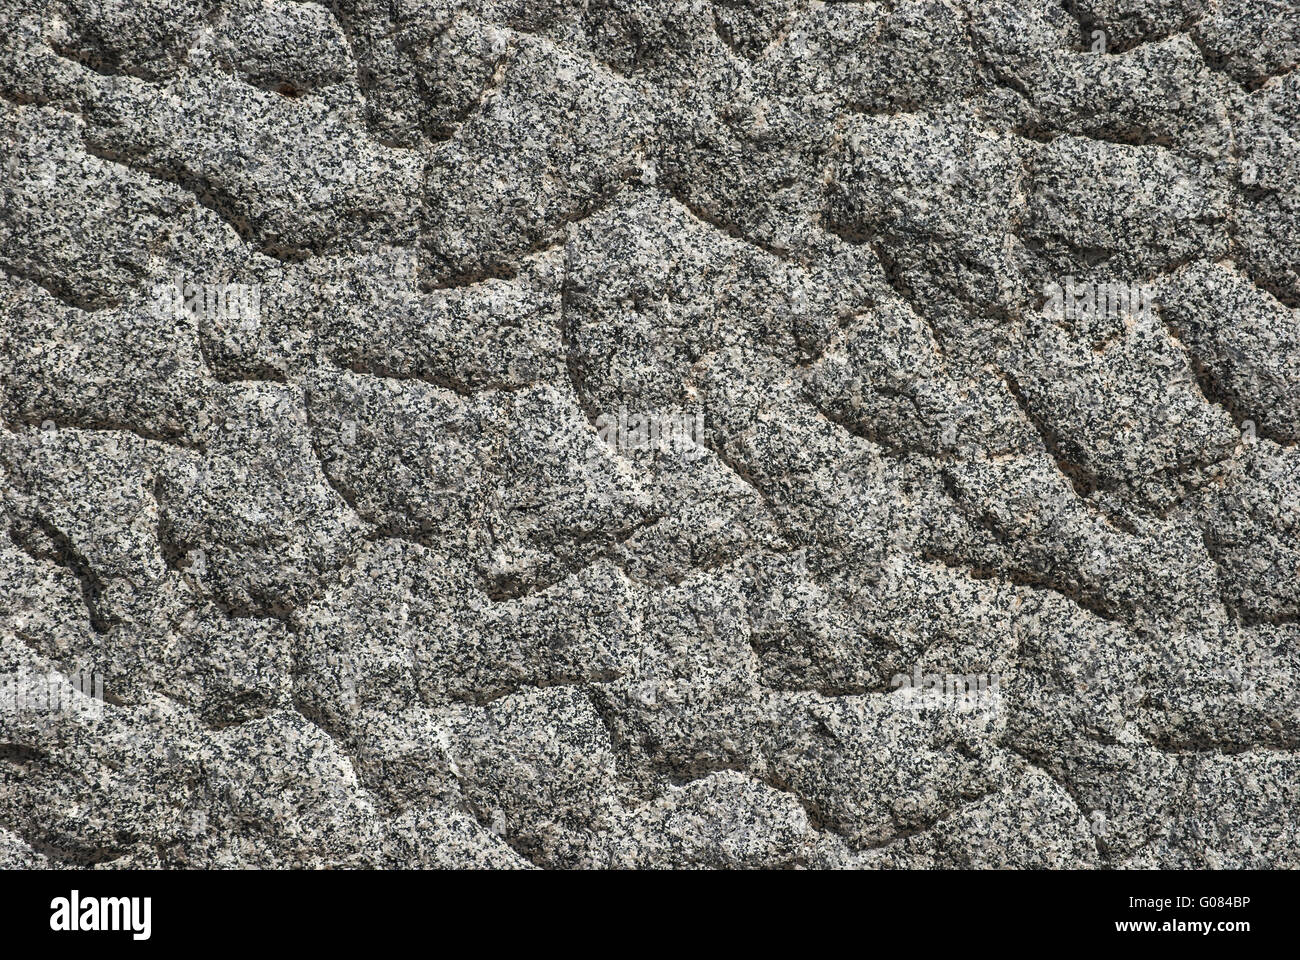 Granite block bumpy surface closeup as background Stock Photo